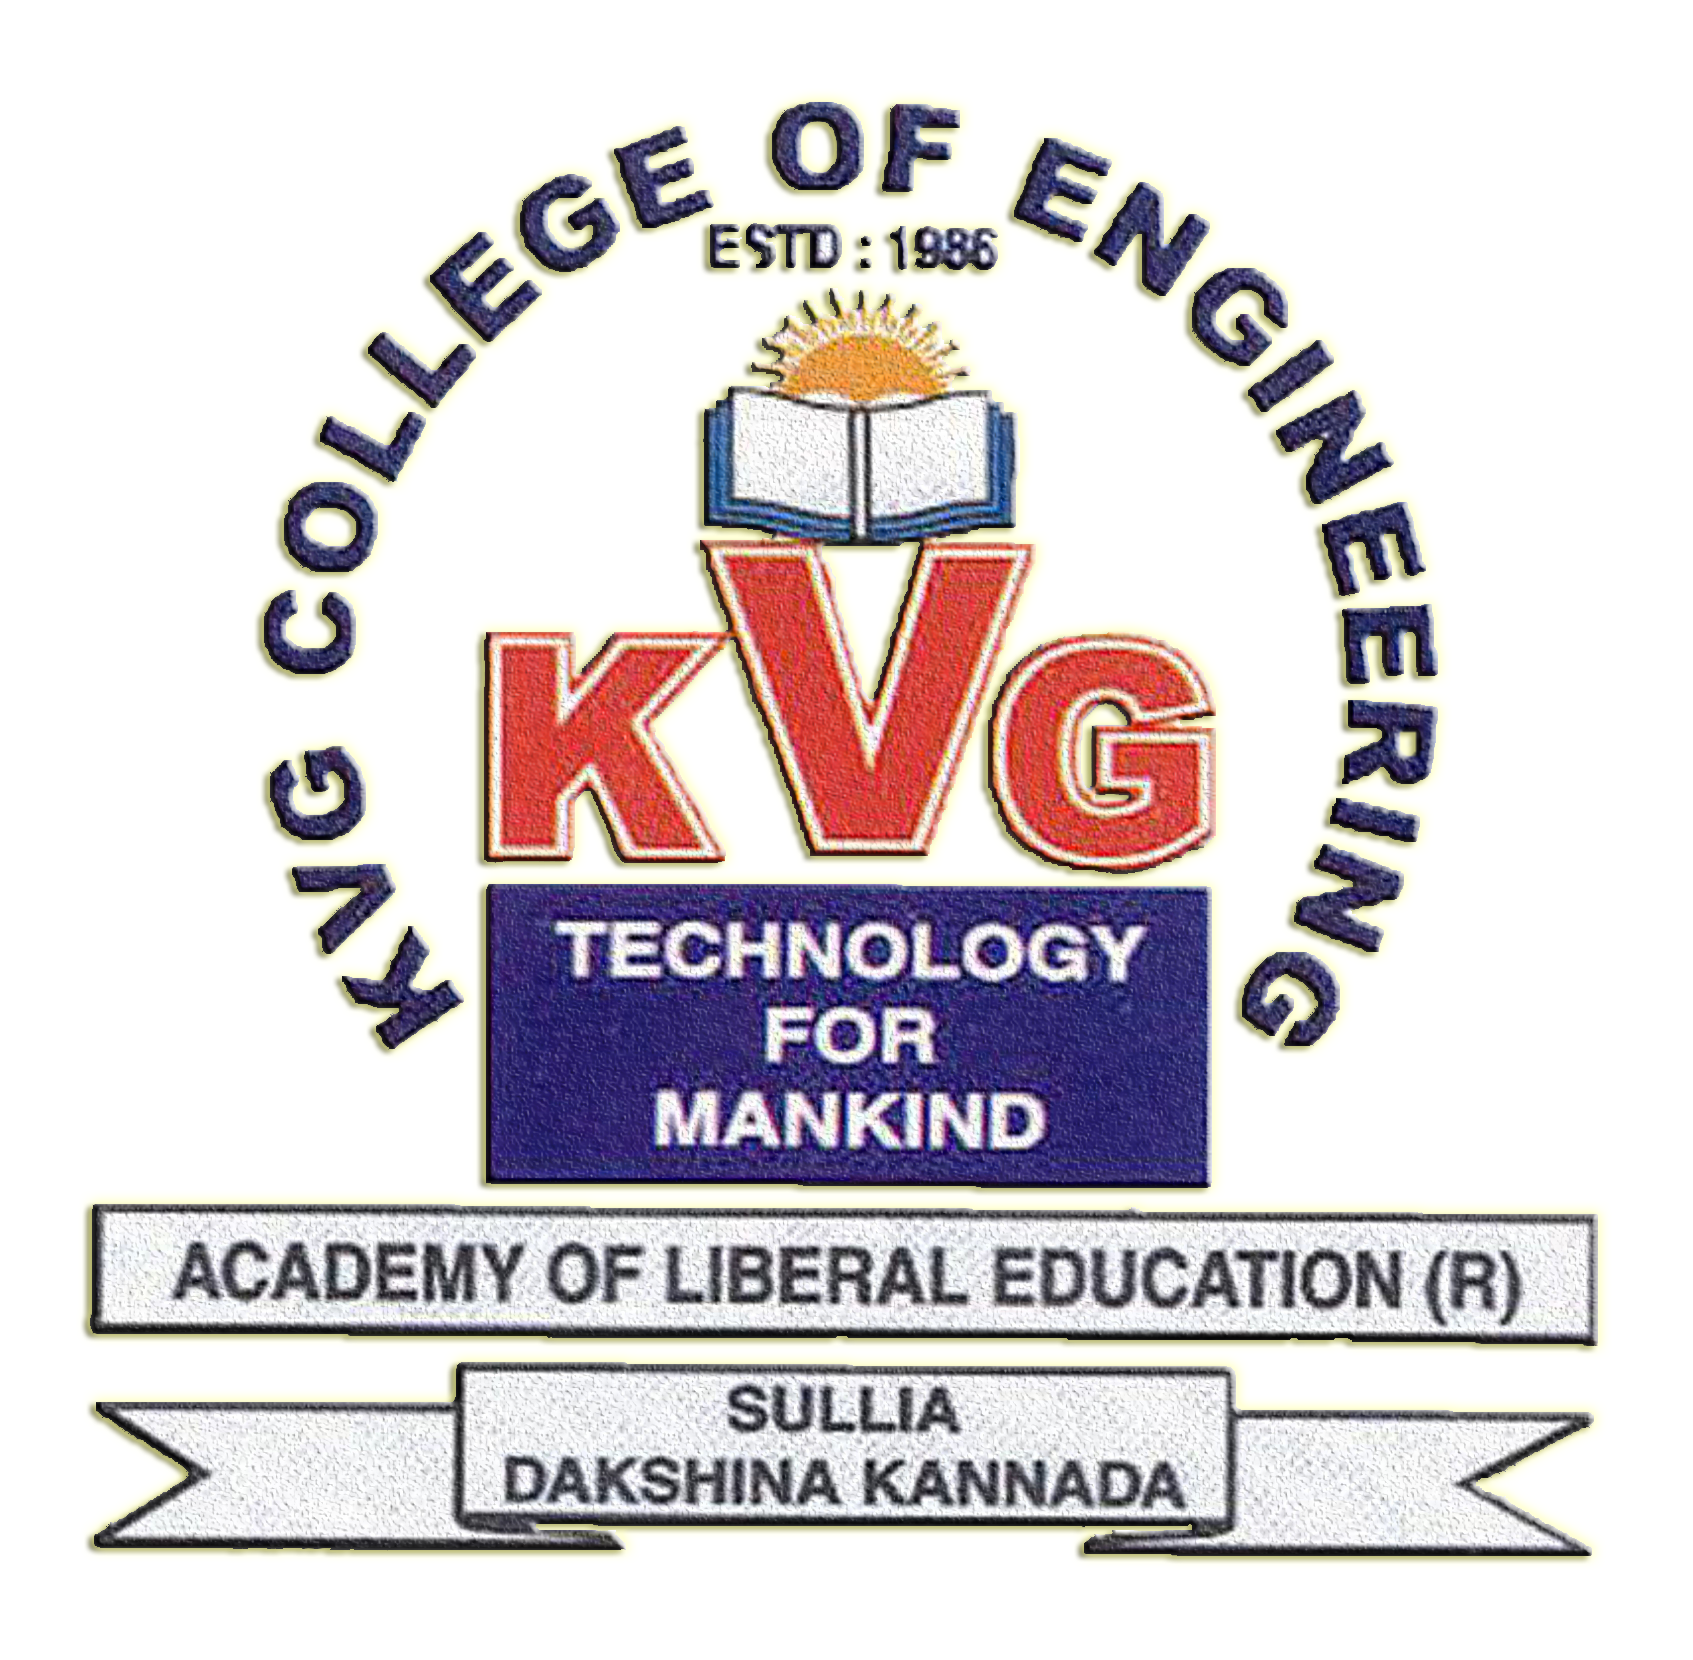 K.V.G. College of Engineering|Schools|Education